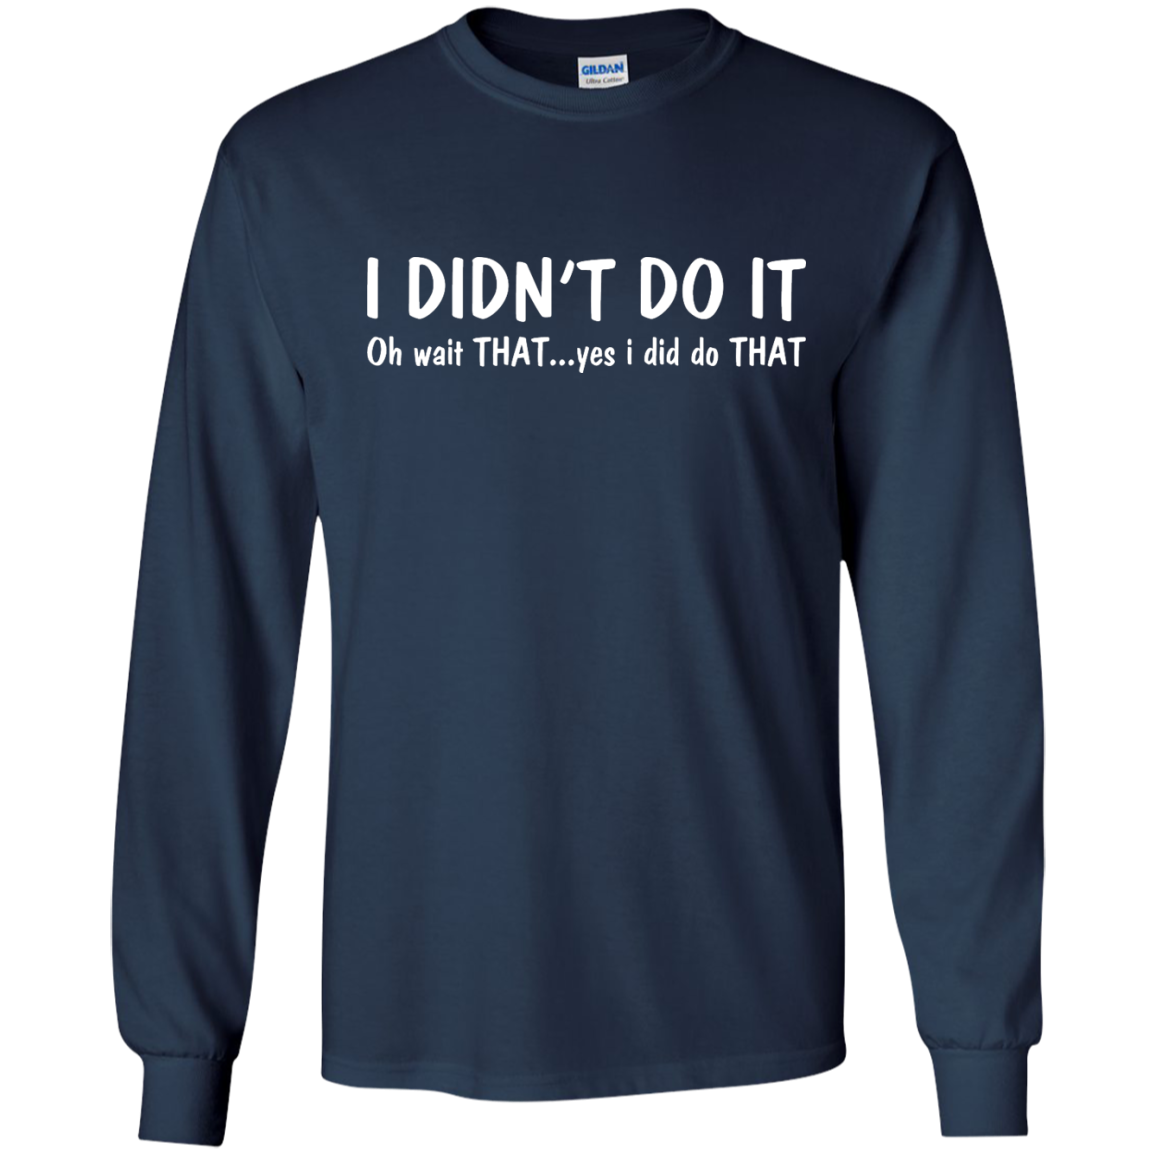 Funny t-shirt: I Didn't Do It shirt, sweater, tank